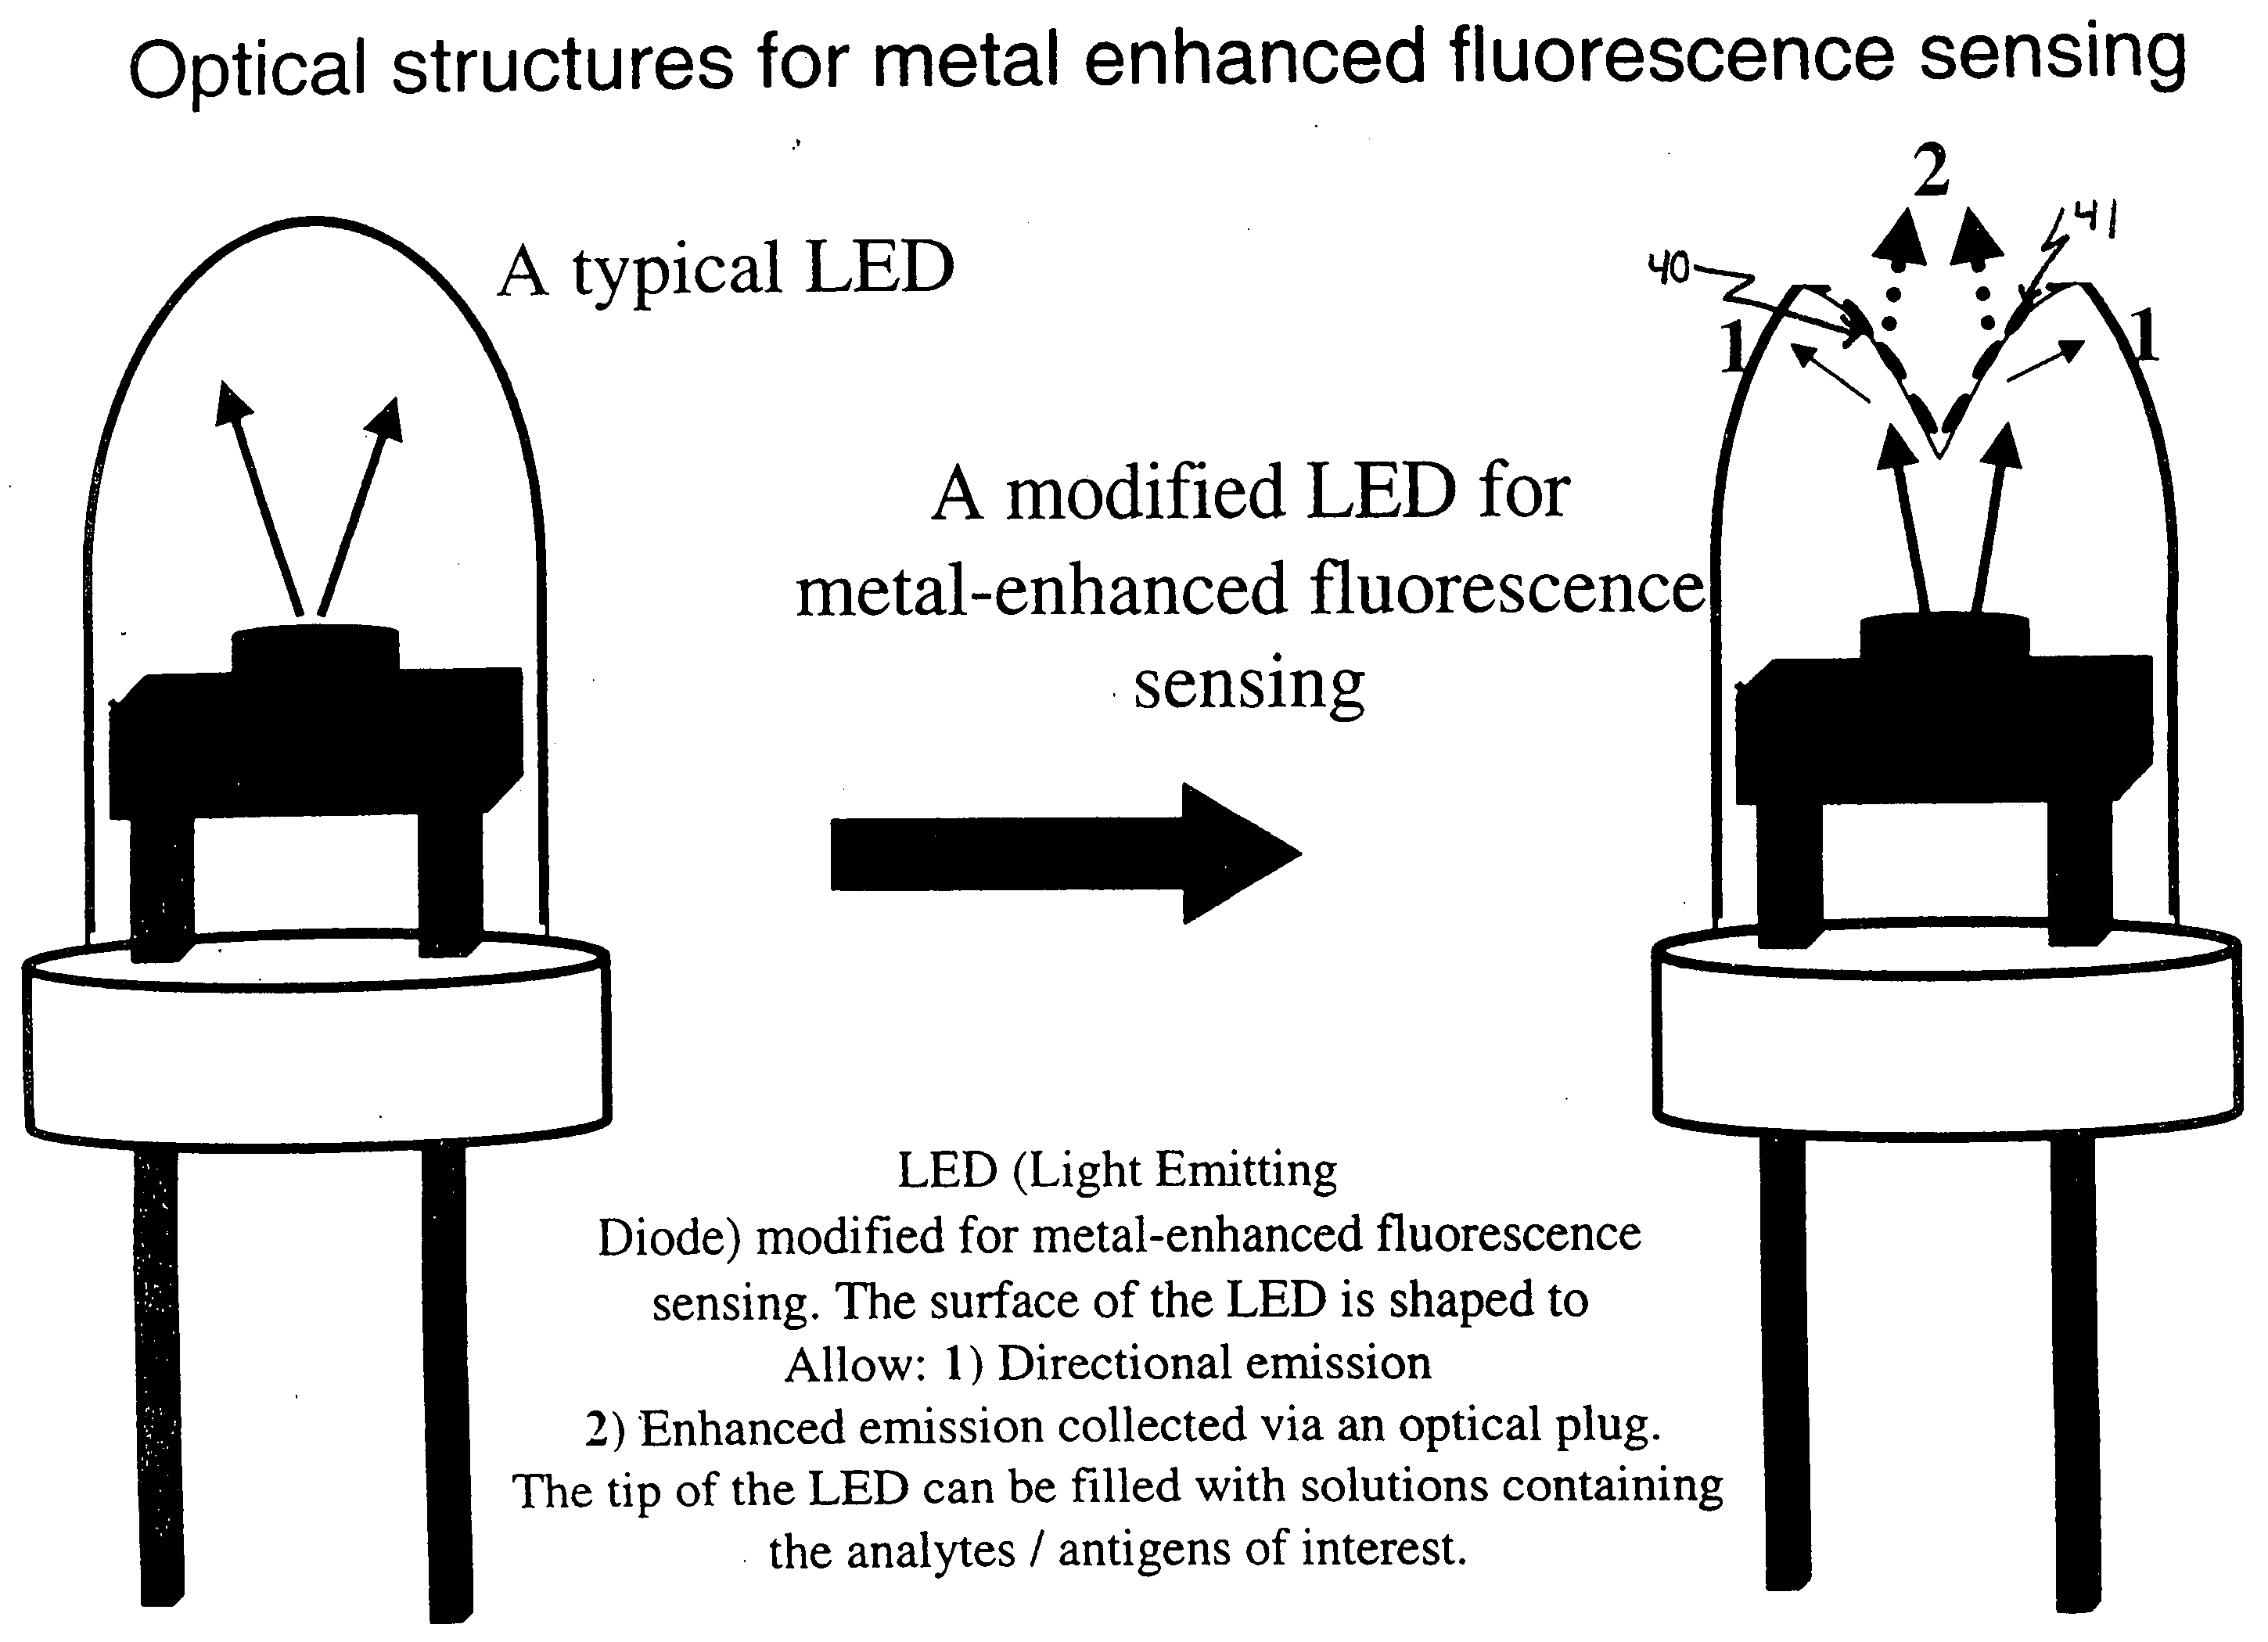 Optical structures for metal-enhanced sensing